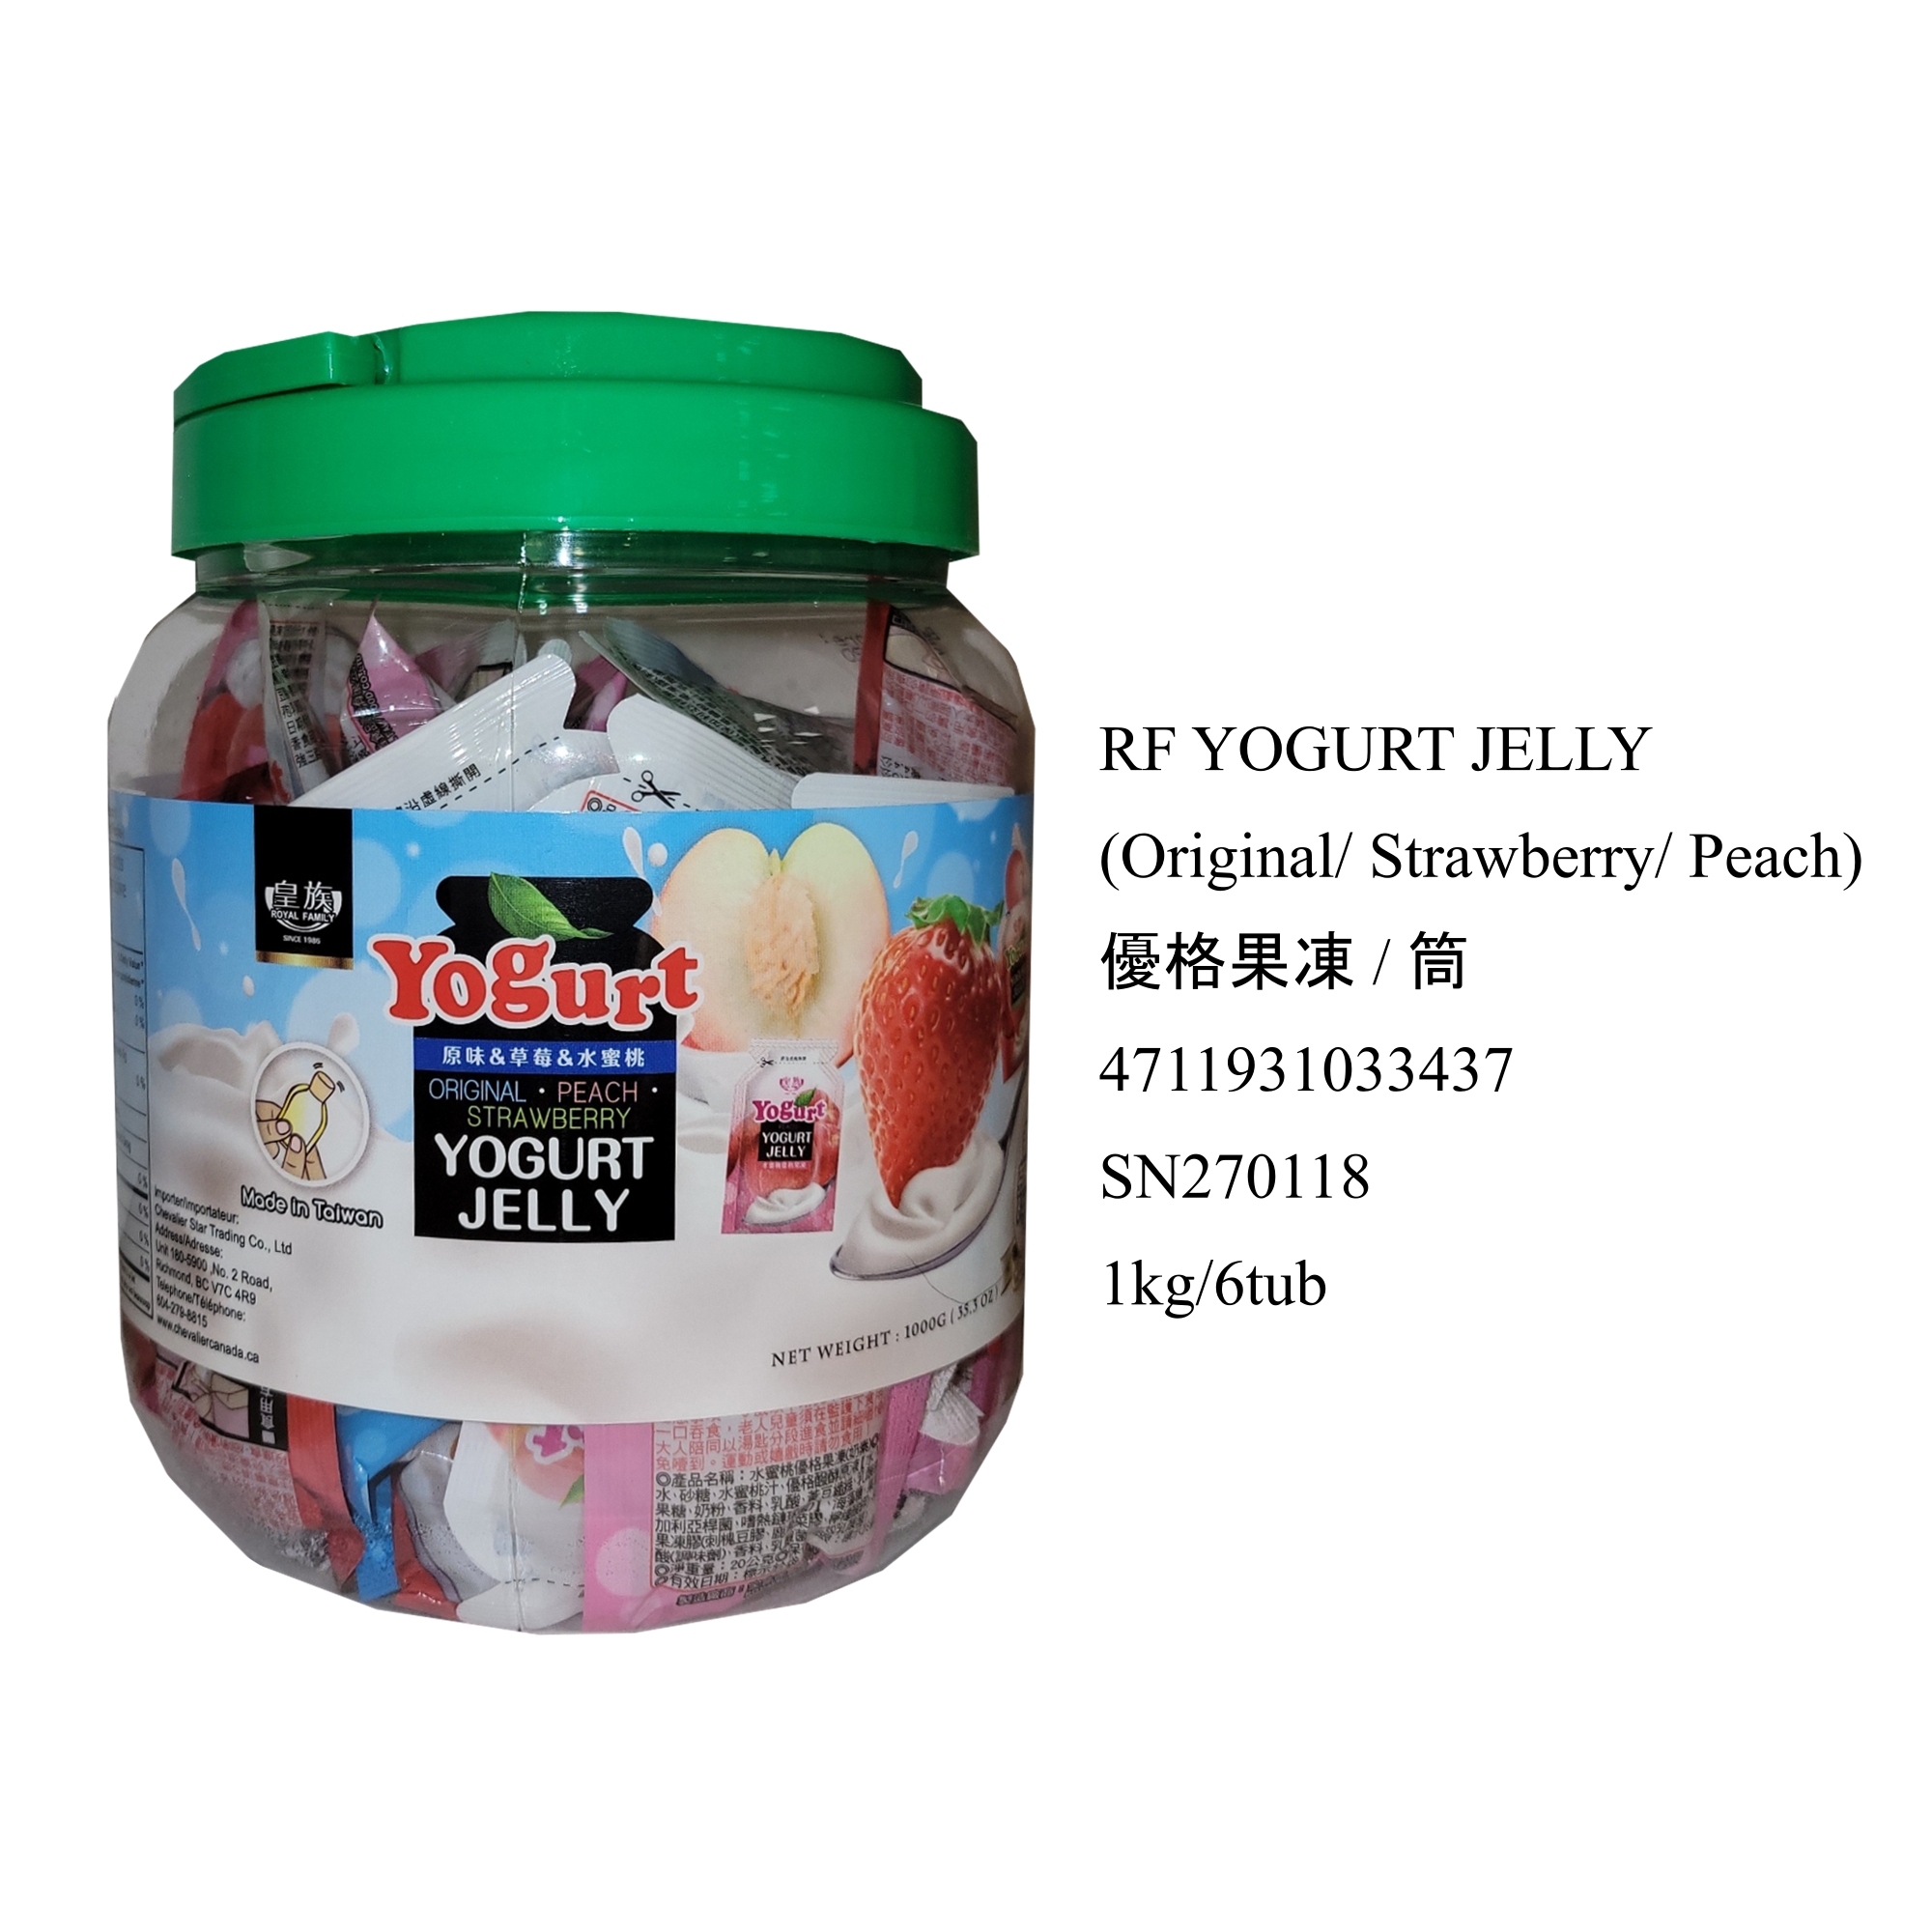 RF YOGURT JELLY (Original/ Strawberry/ Peach) SN270118